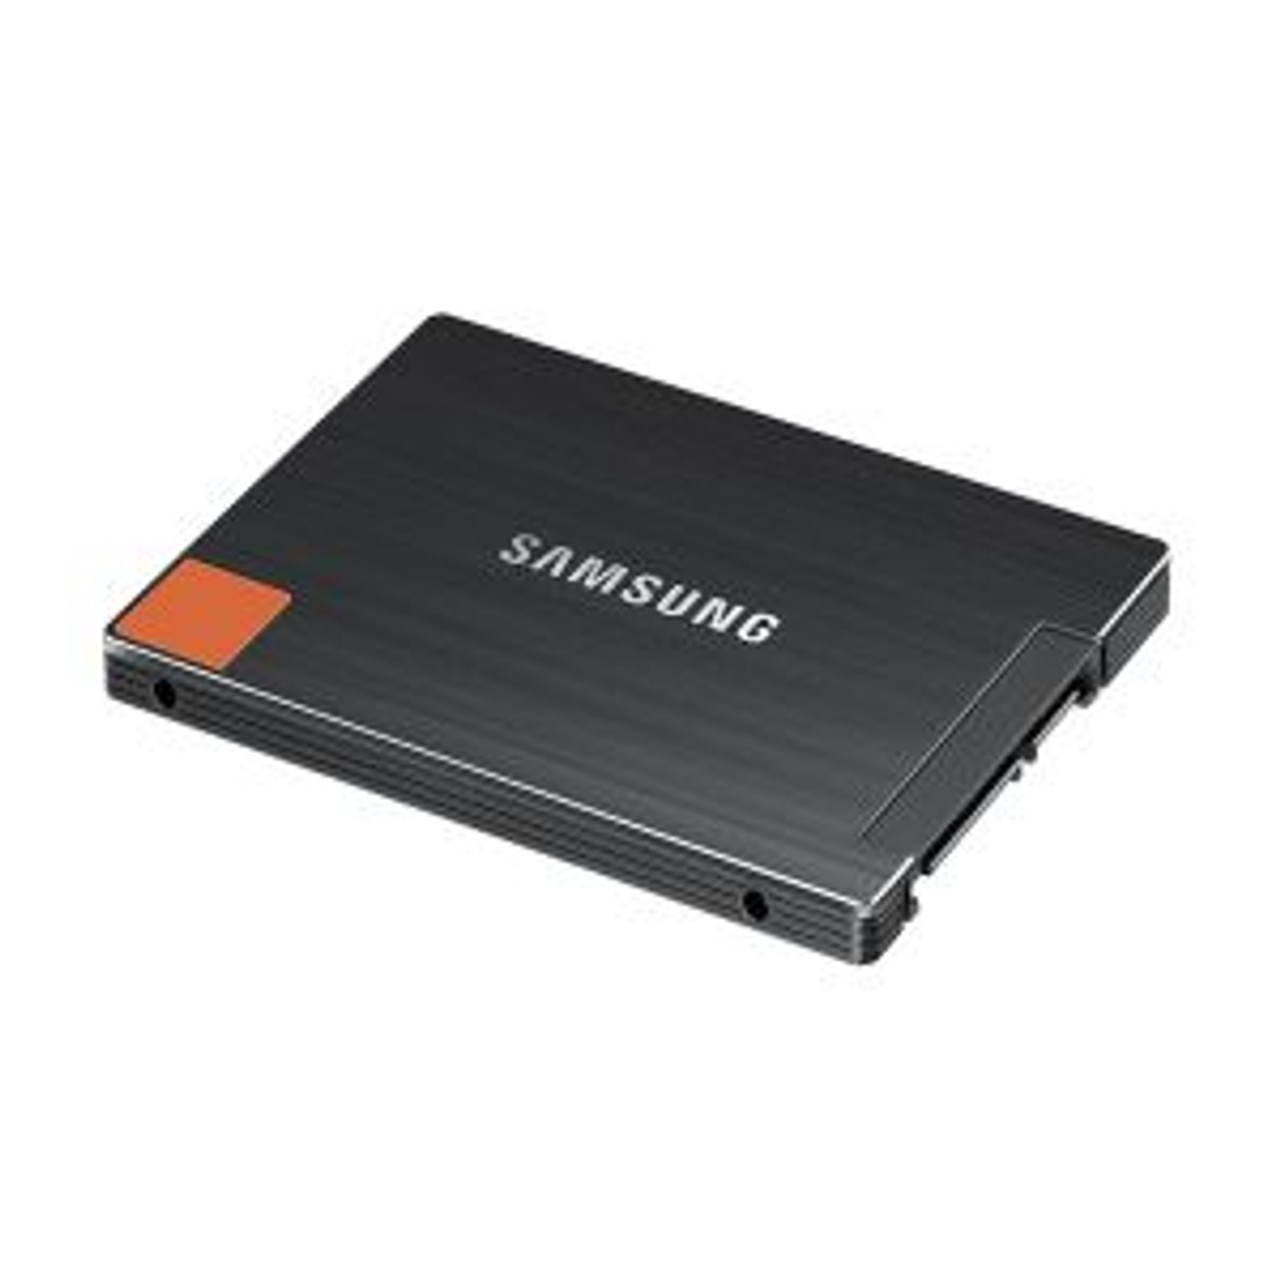 MZ-7PC256B/KR | Samsung | 830 Series 256GB MLC SATA 6Gb/s 2.5-inch Solid State Drive (SSD)